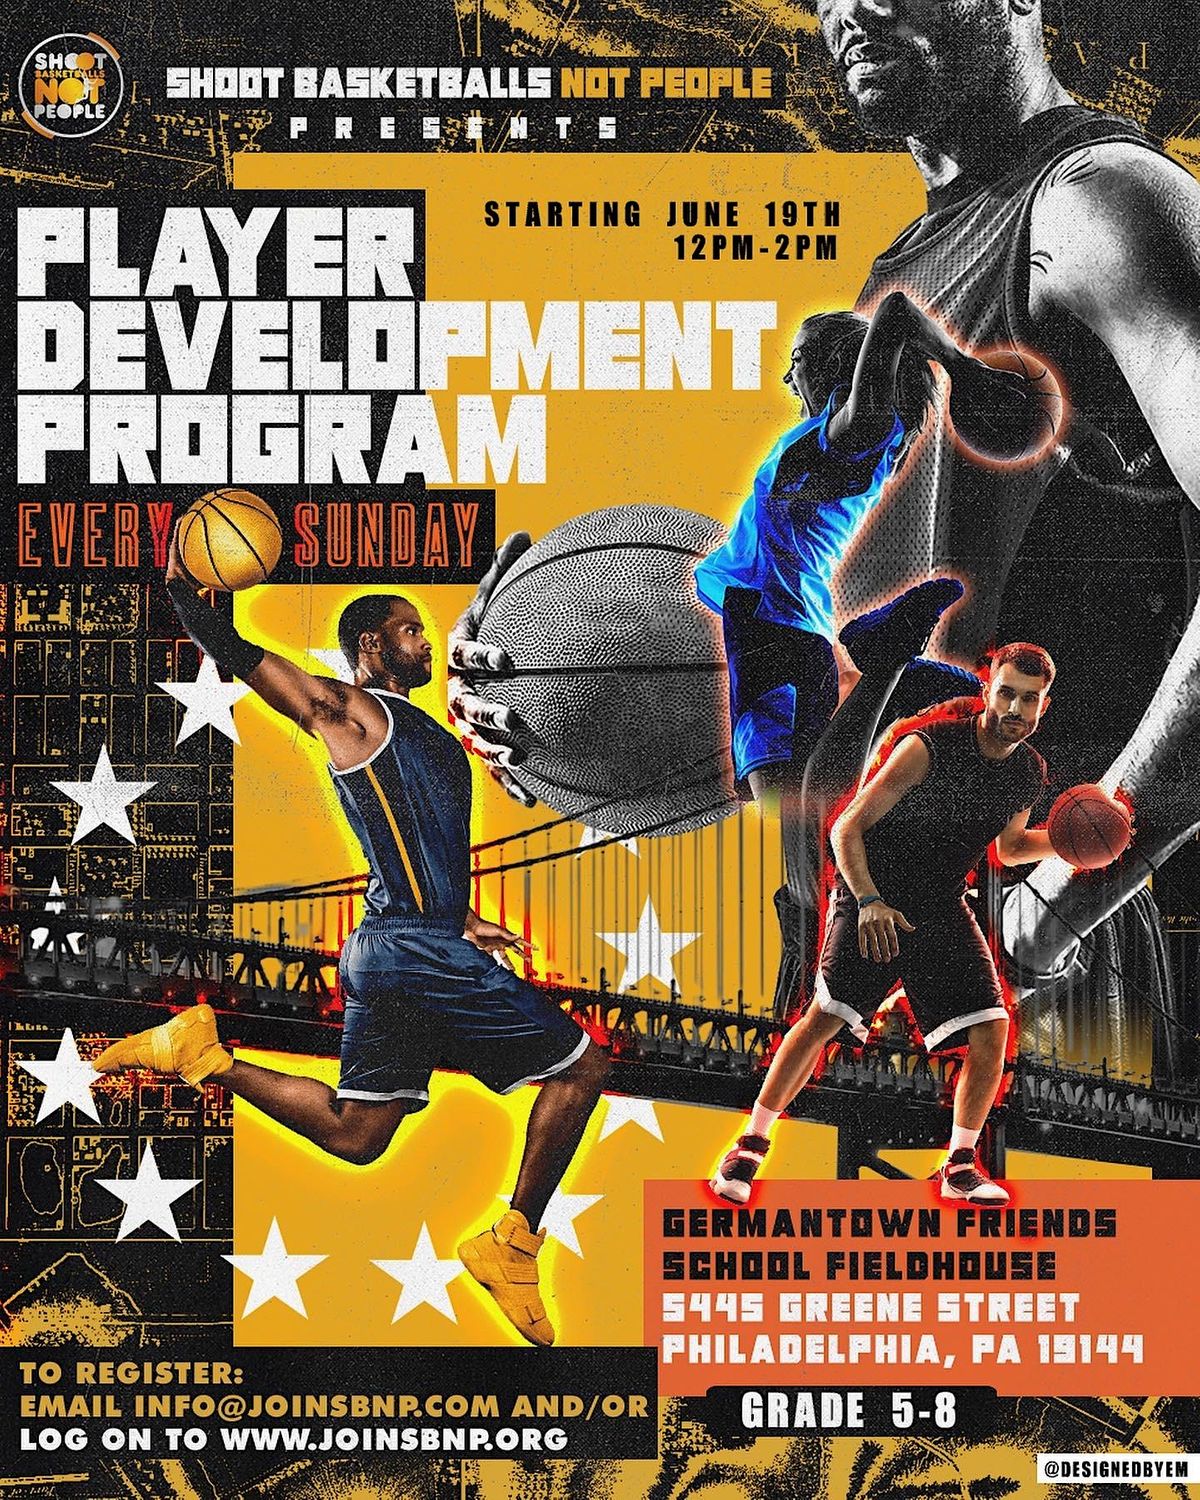 Shoot Basketballs NOT People Player Development Program